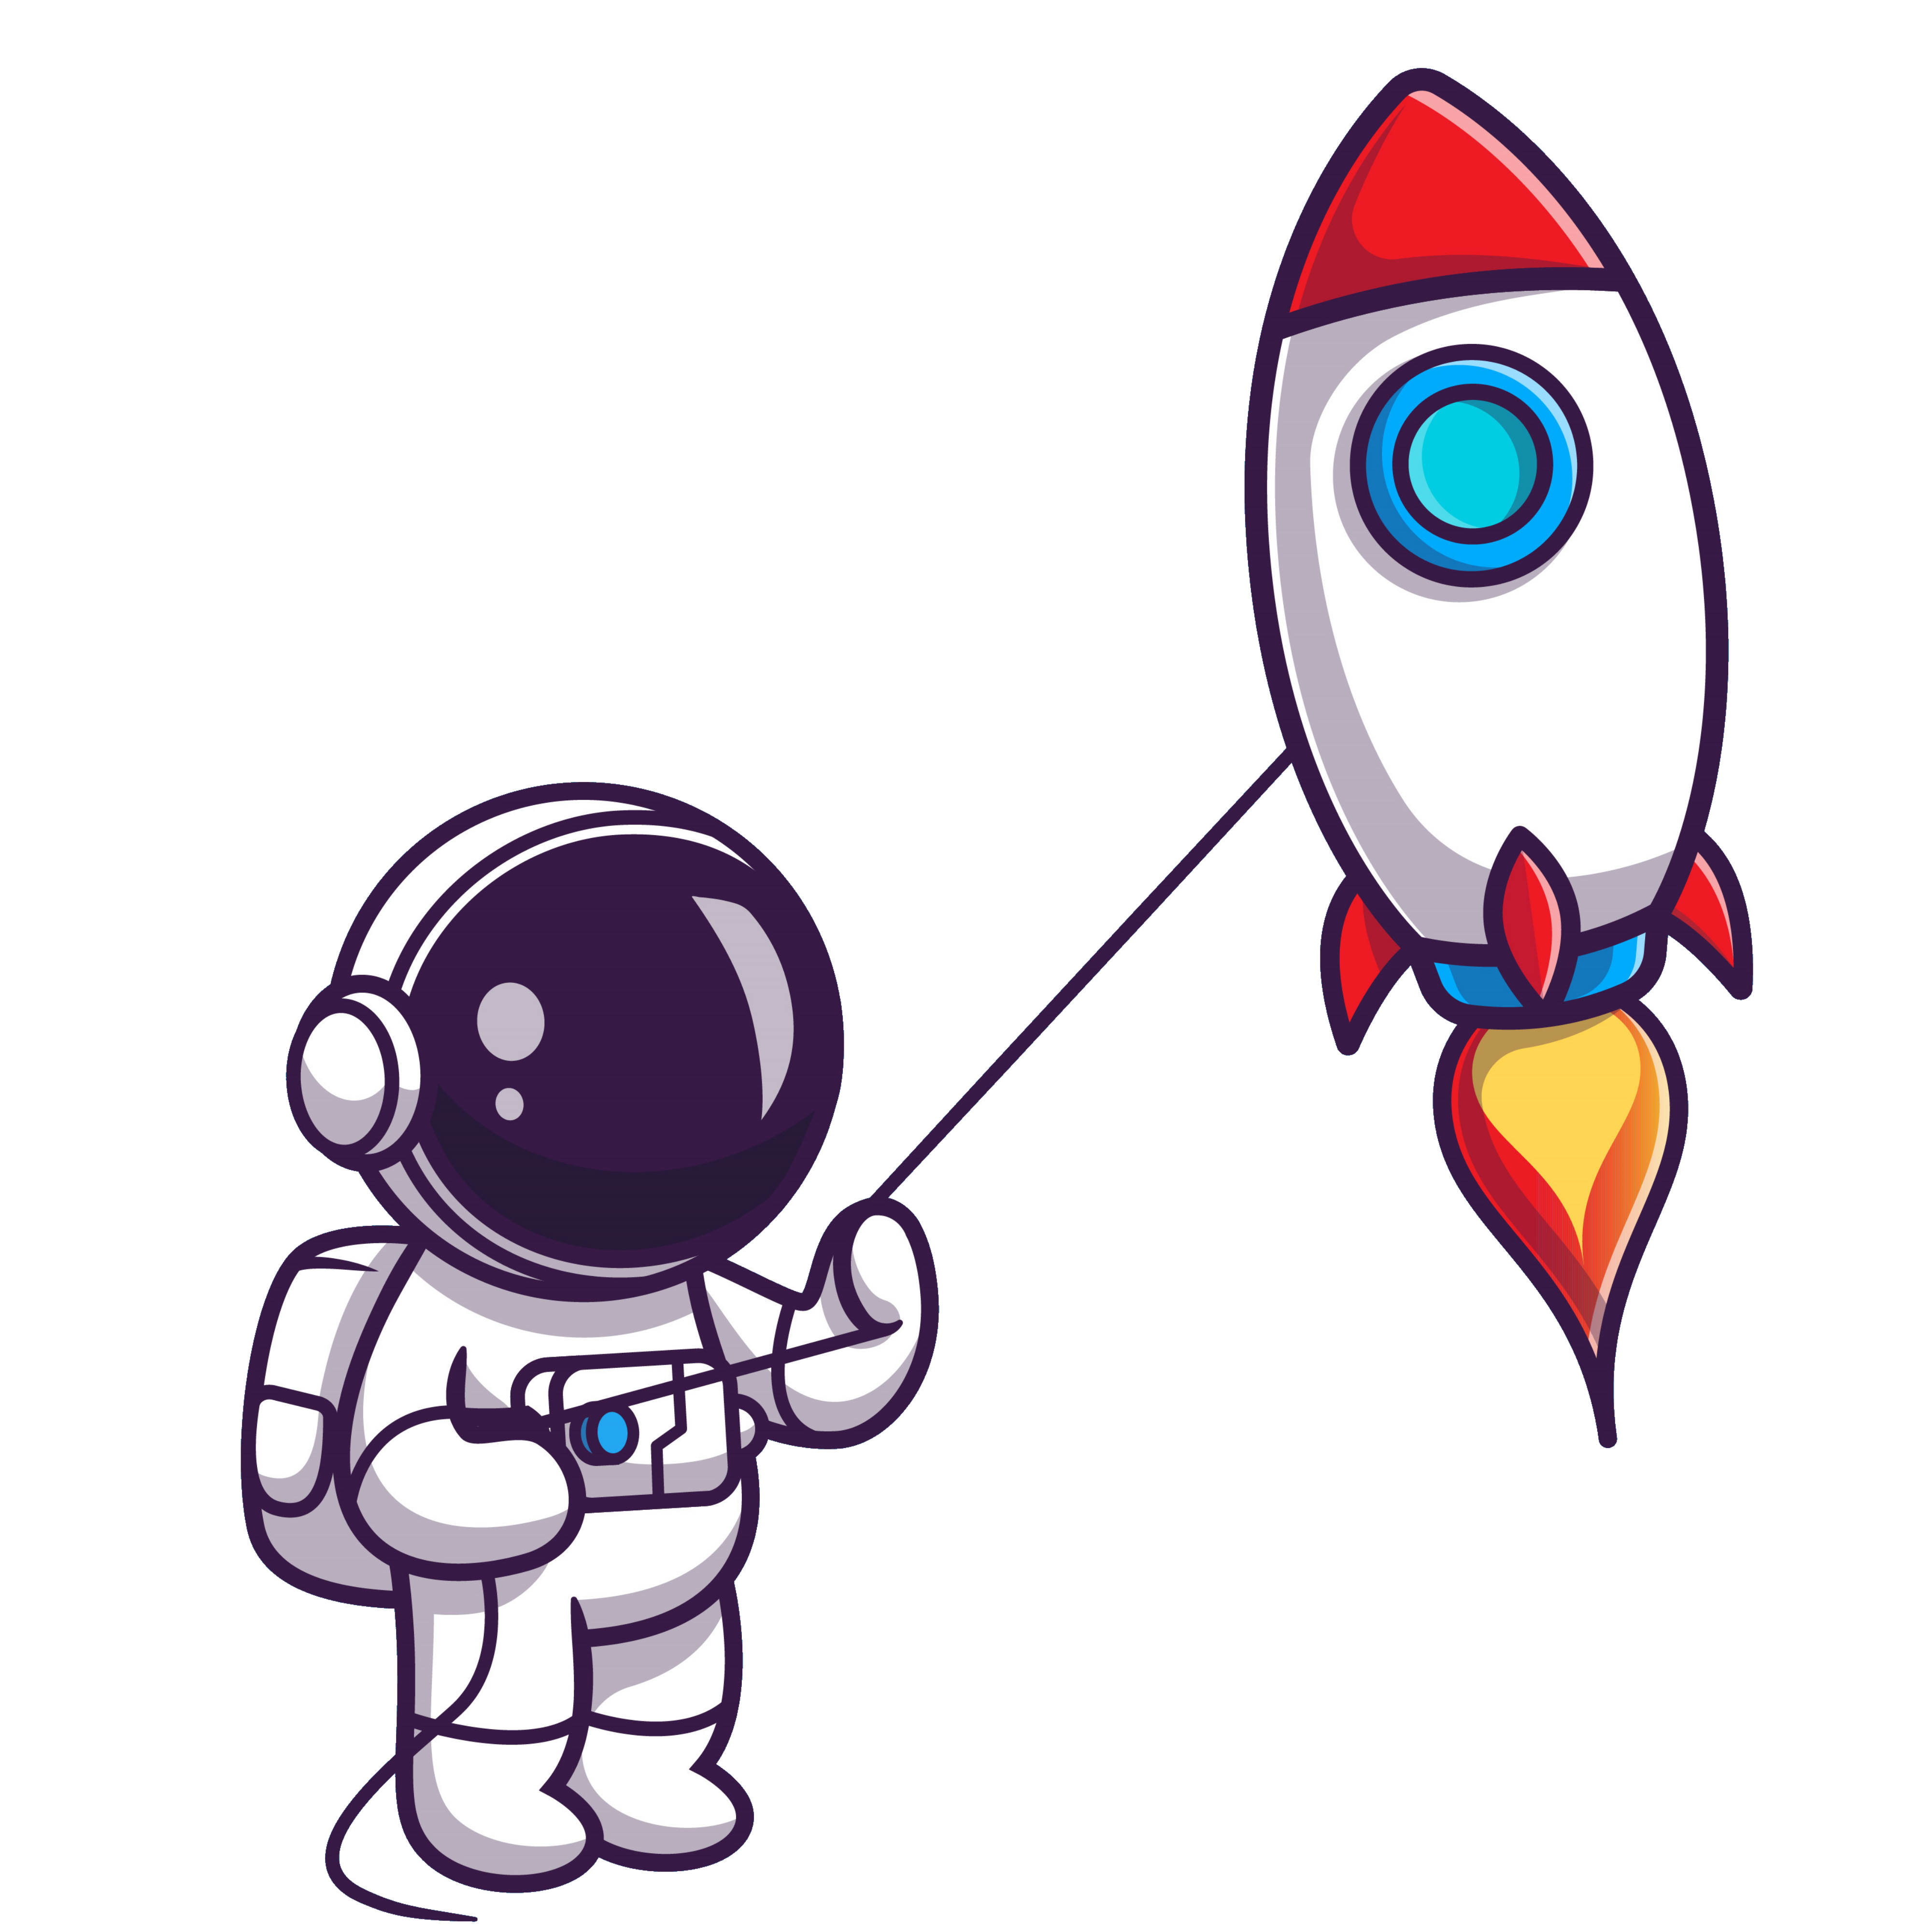 Astronaut on flying rocket kite